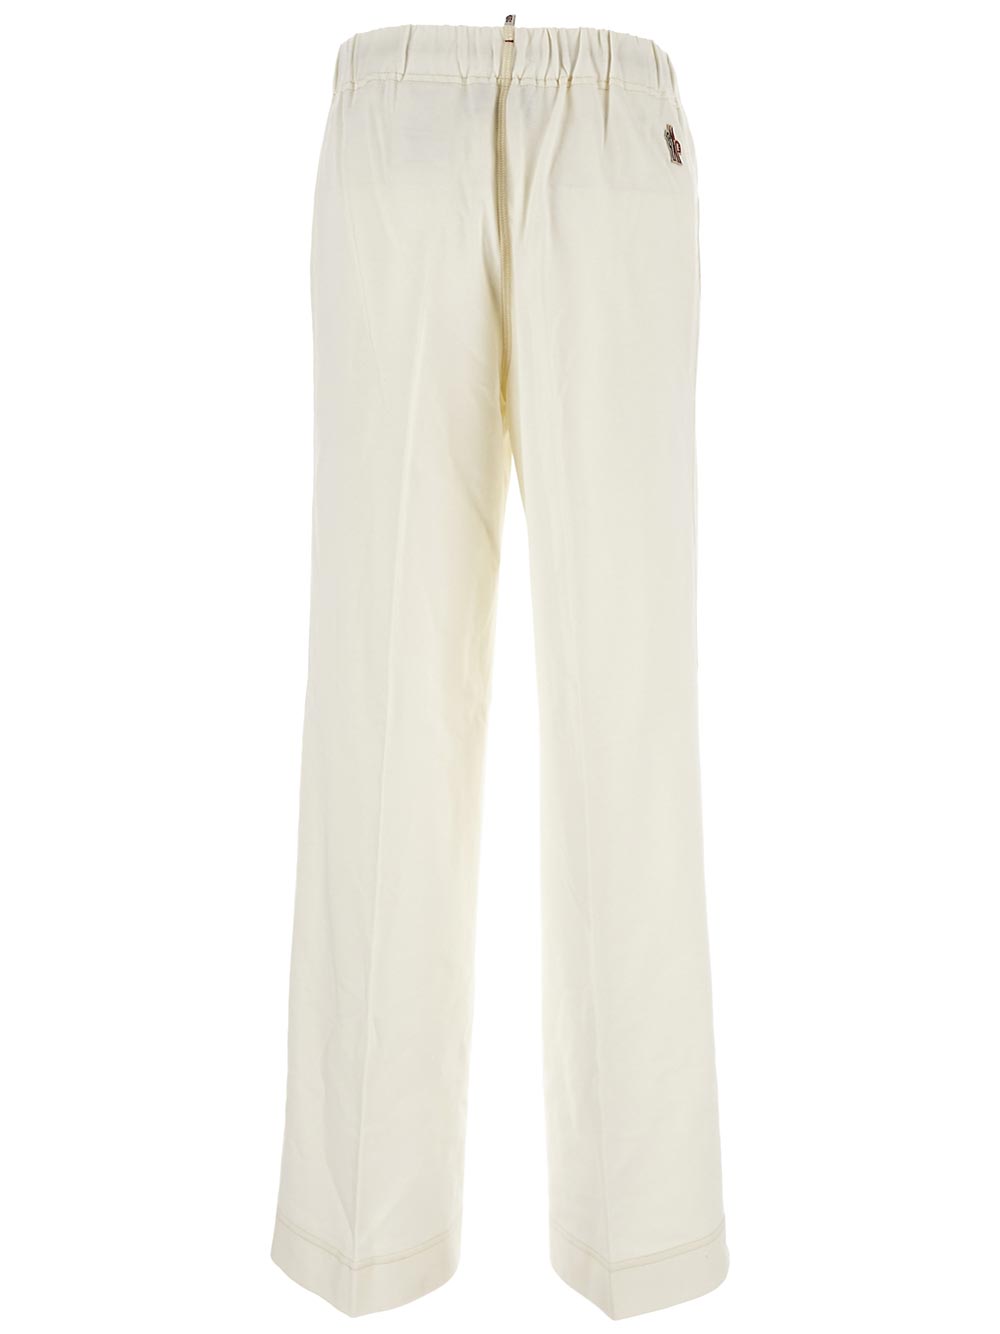 Moncler Grenoble MONCLER GRENOBLE Trousers white 8H00002809AD038